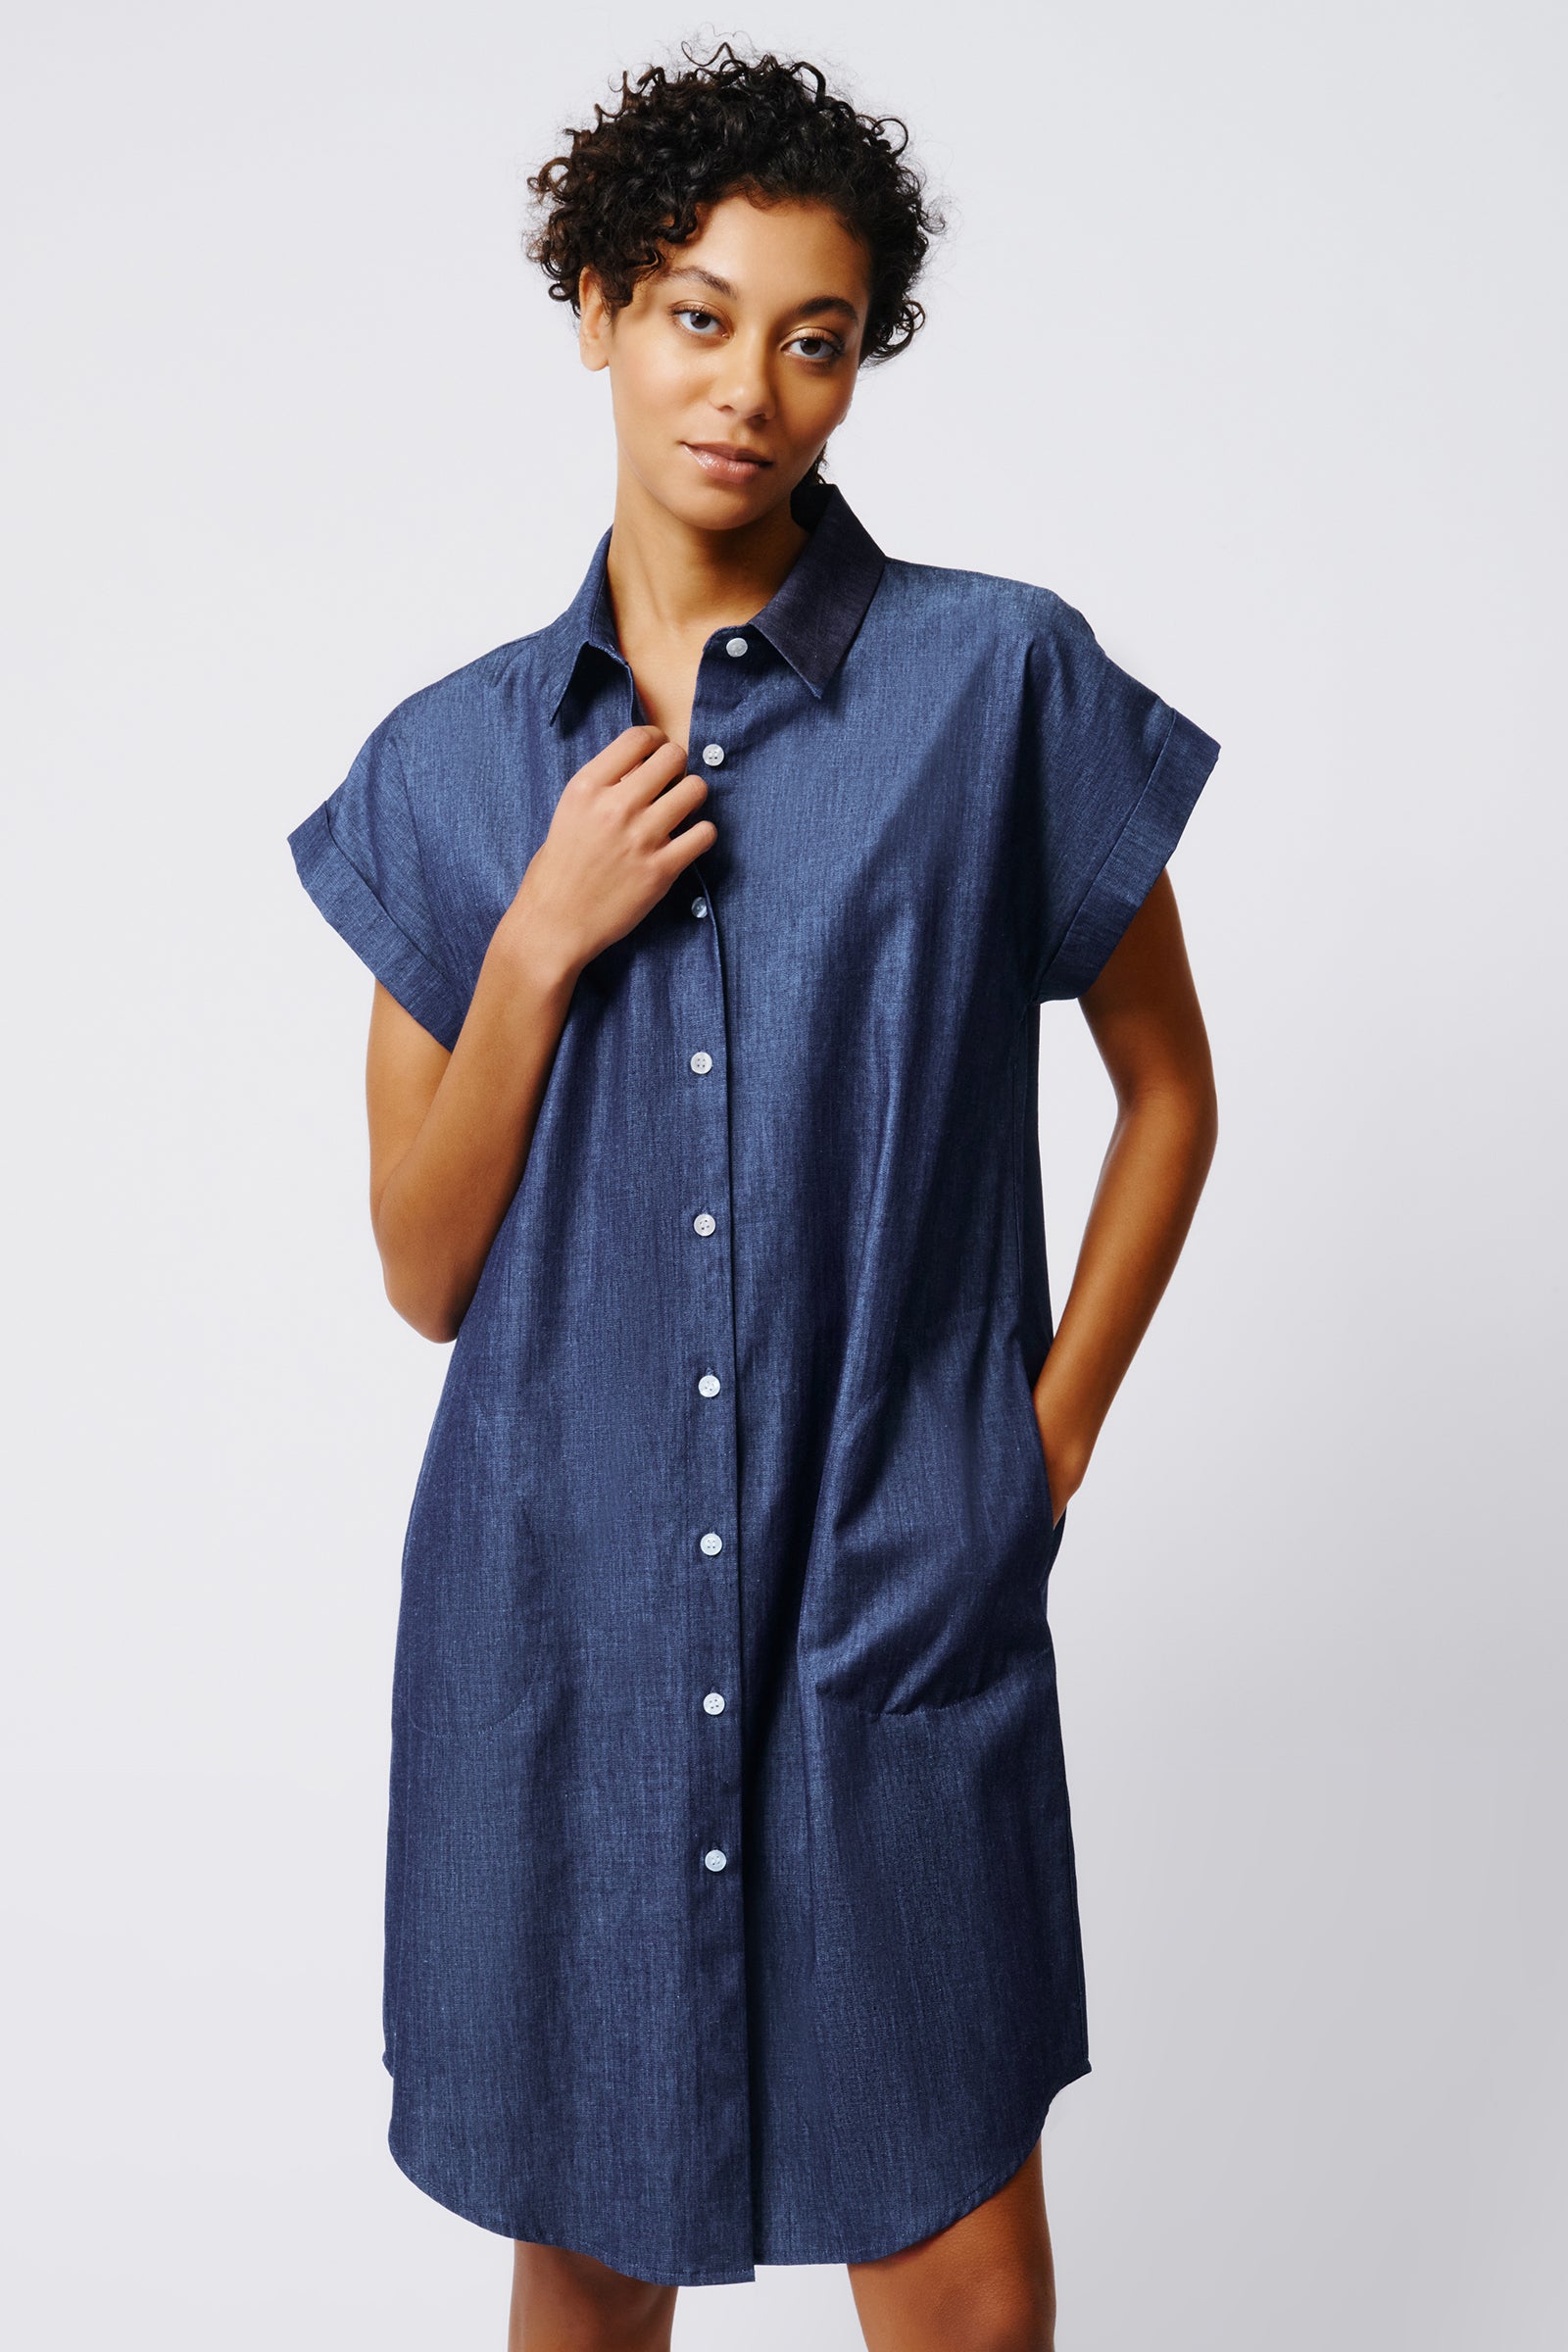 Kal Rieman Hedy Cuffed Cap Sleeve Shirt Dress in Classic Indigo on Model Front View Crop 4